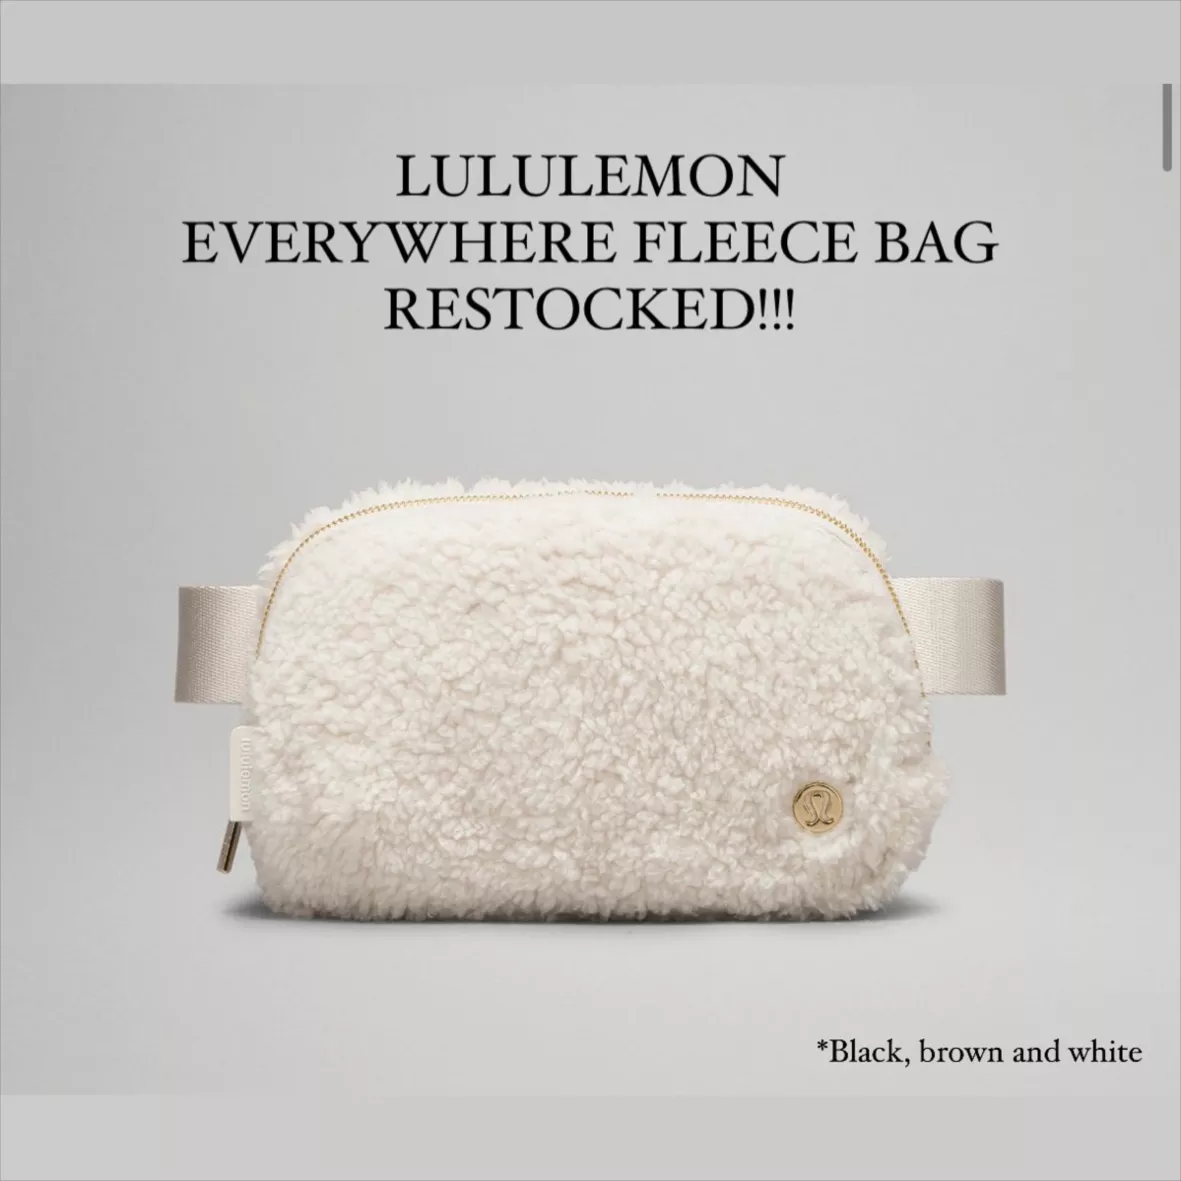 The Lululemon Everywhere Belt Bag Fleece Has Been Restocked